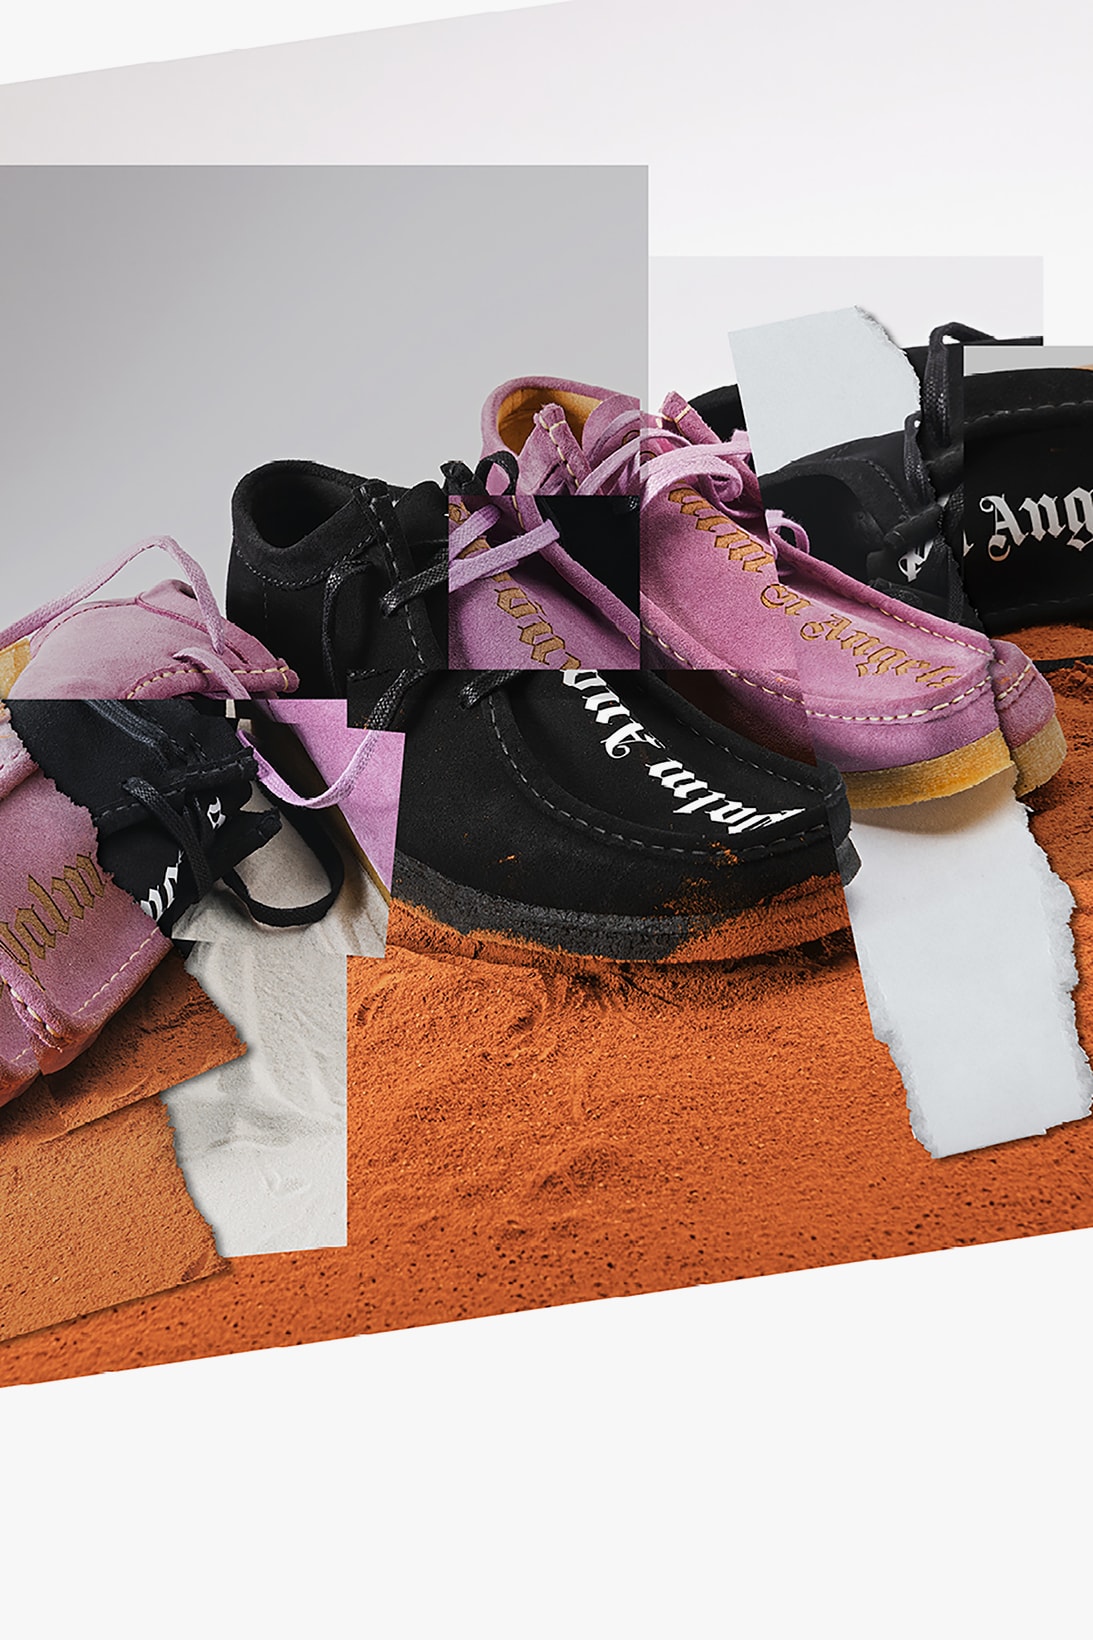 clarks originals palm angels collaboration wallabee boots black purple shoes footwear